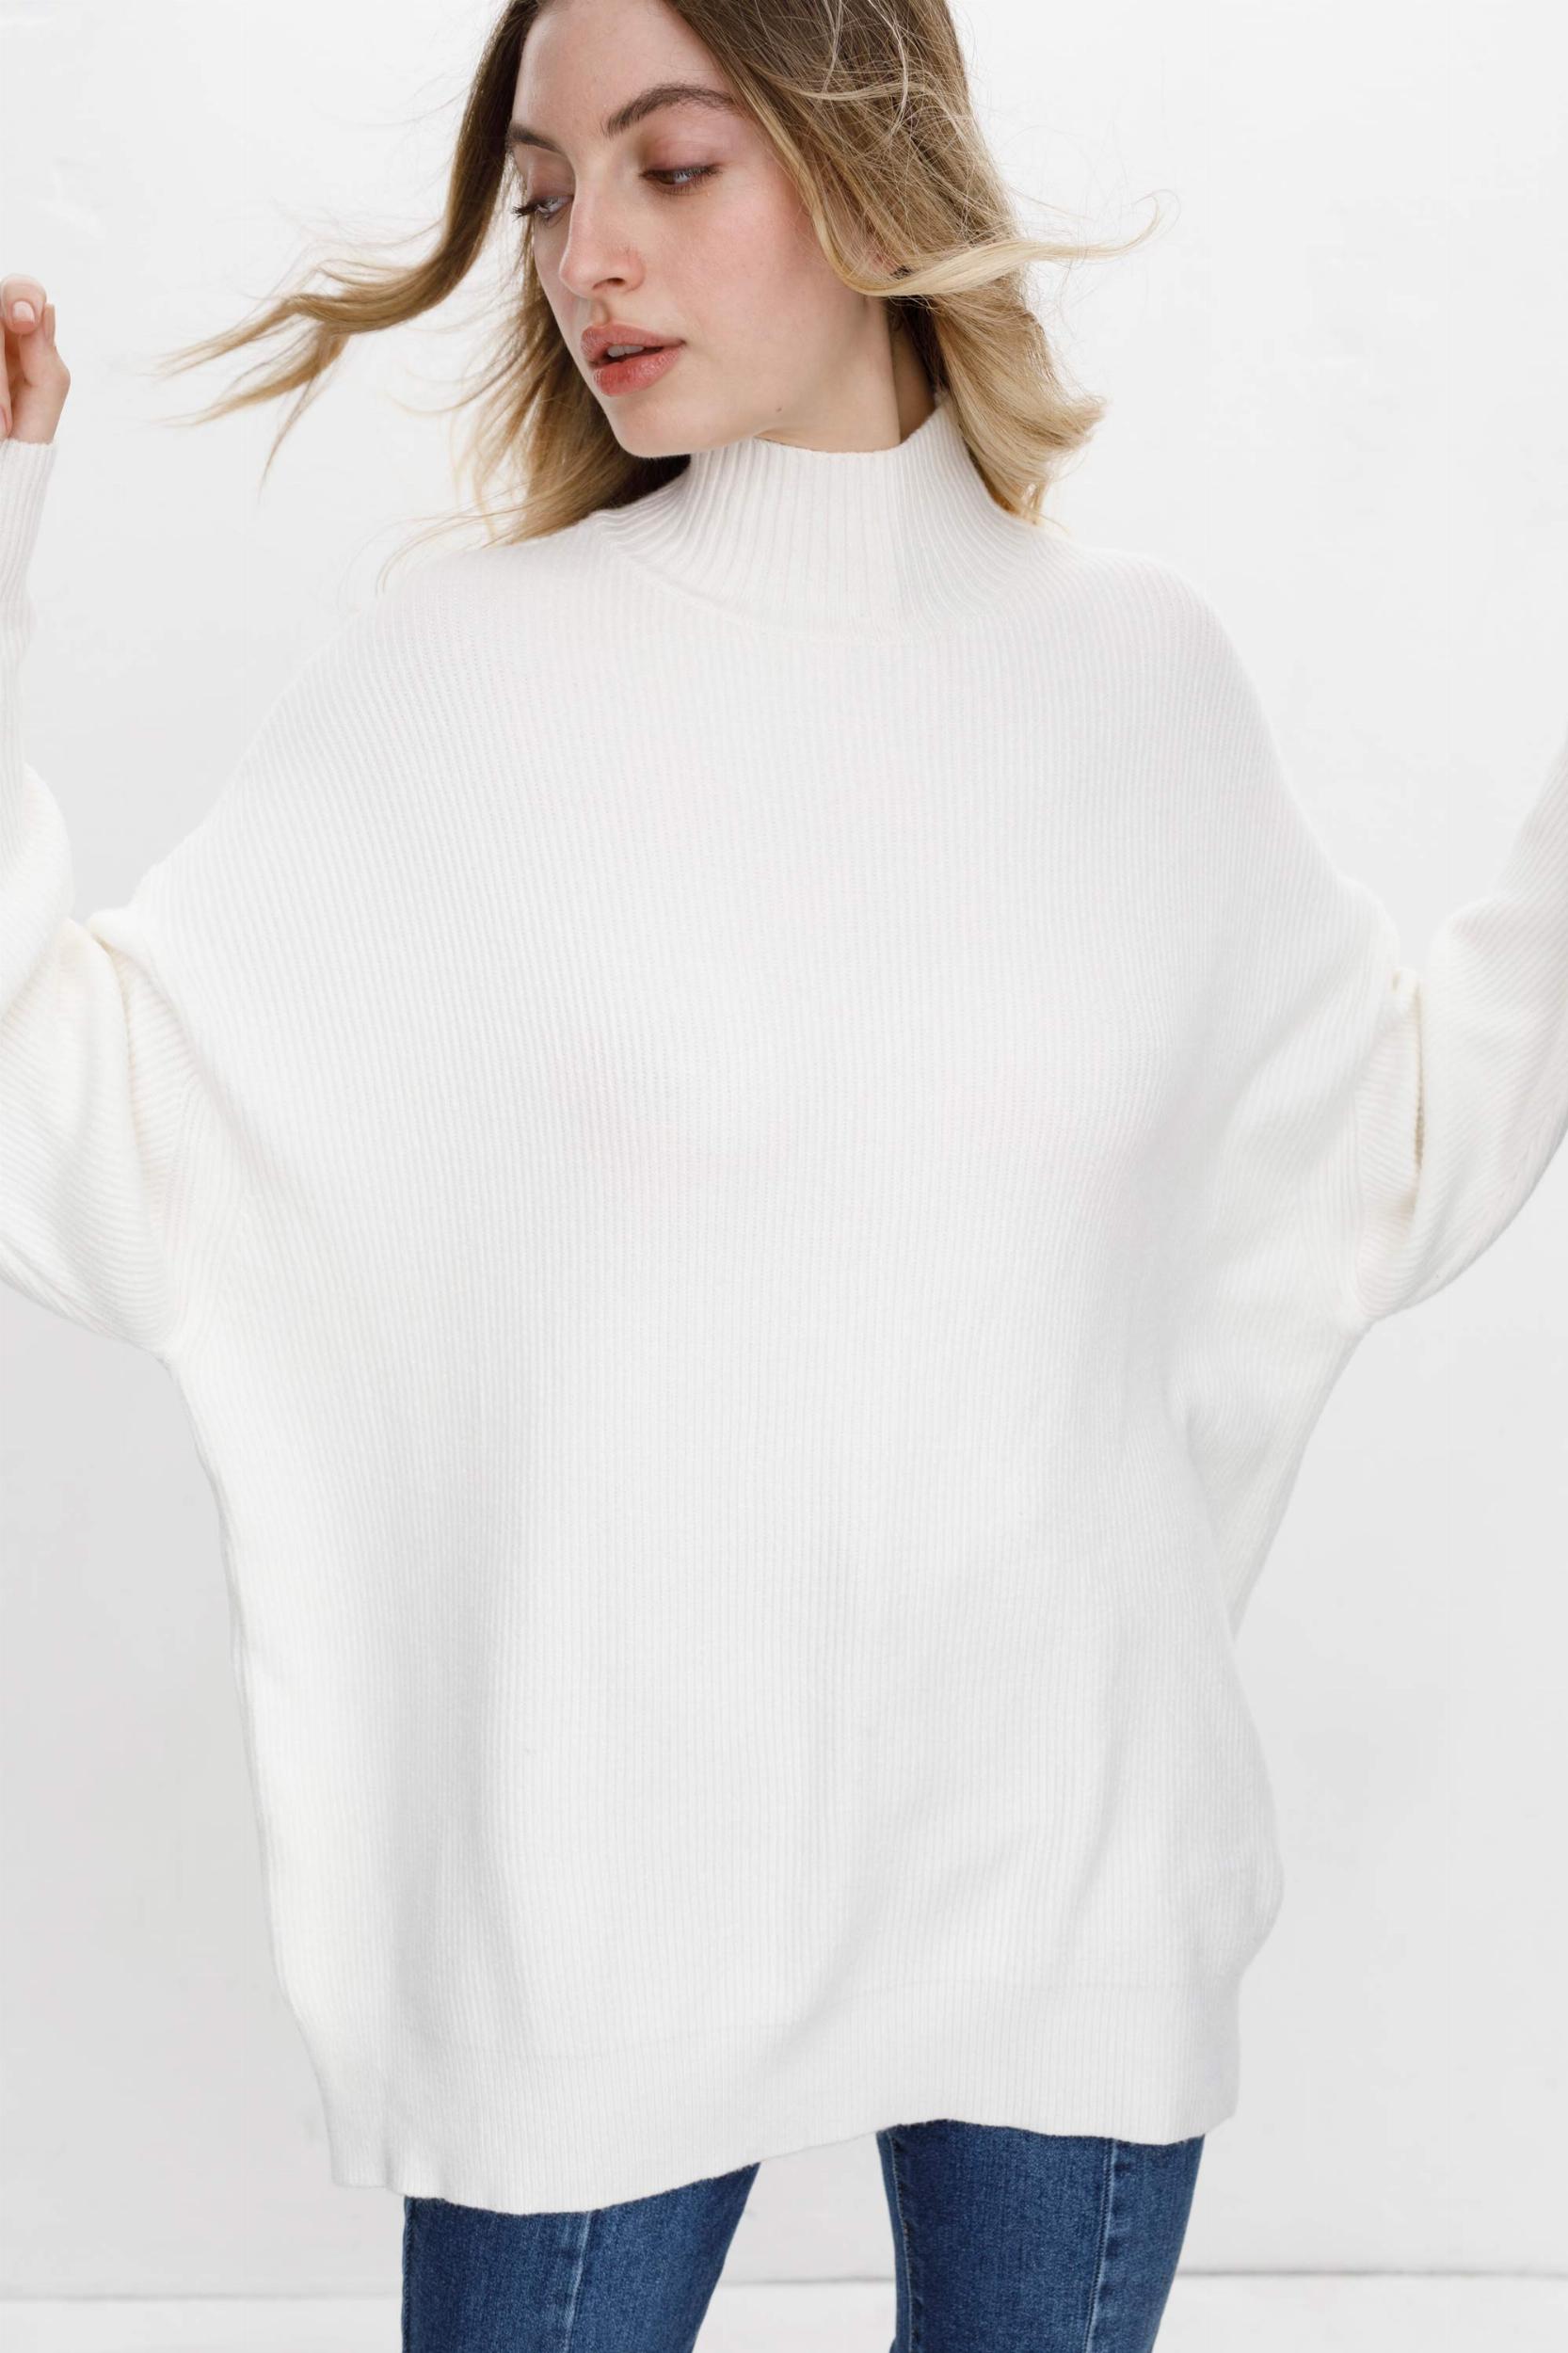 Sweater Marlene blanco talle unico